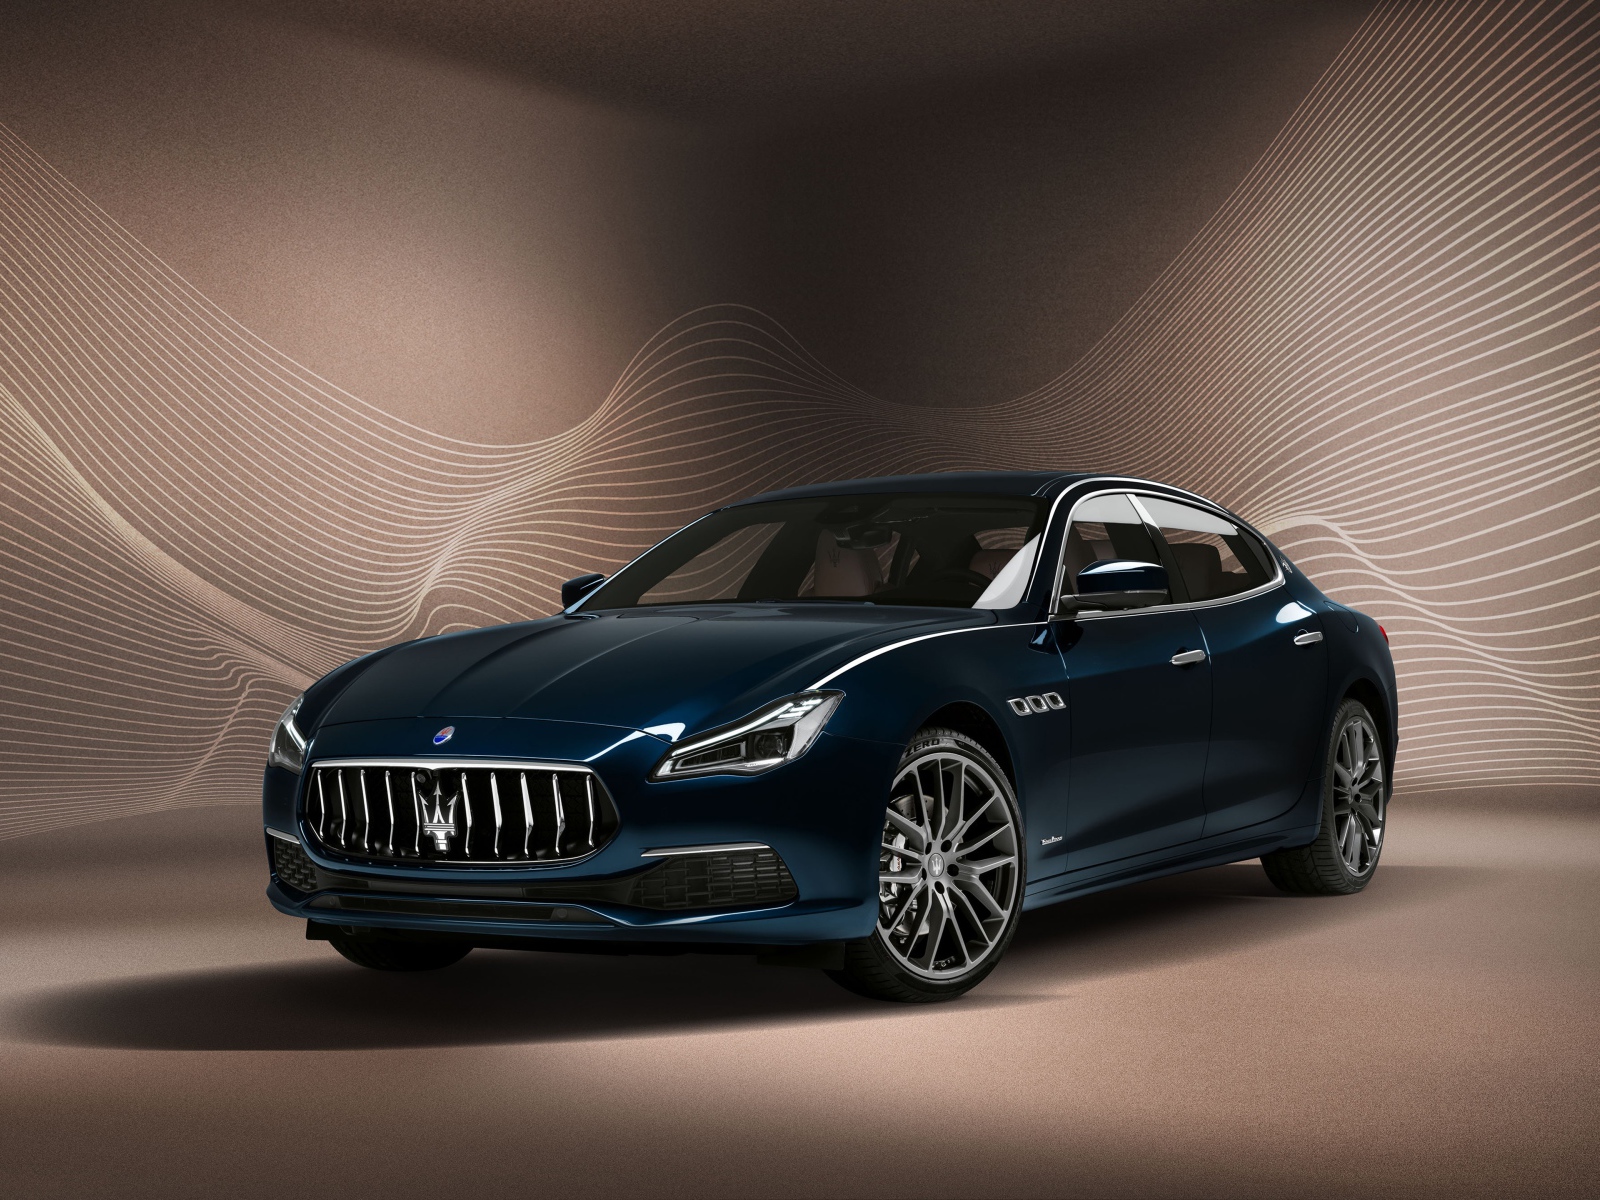 Мазерати производитель. Мазерати Кватропорте 2020. Мазерати Кватропорте 2023. Maserati Quattroporte Sport gt 2020. Maserati Ghibli 2020.